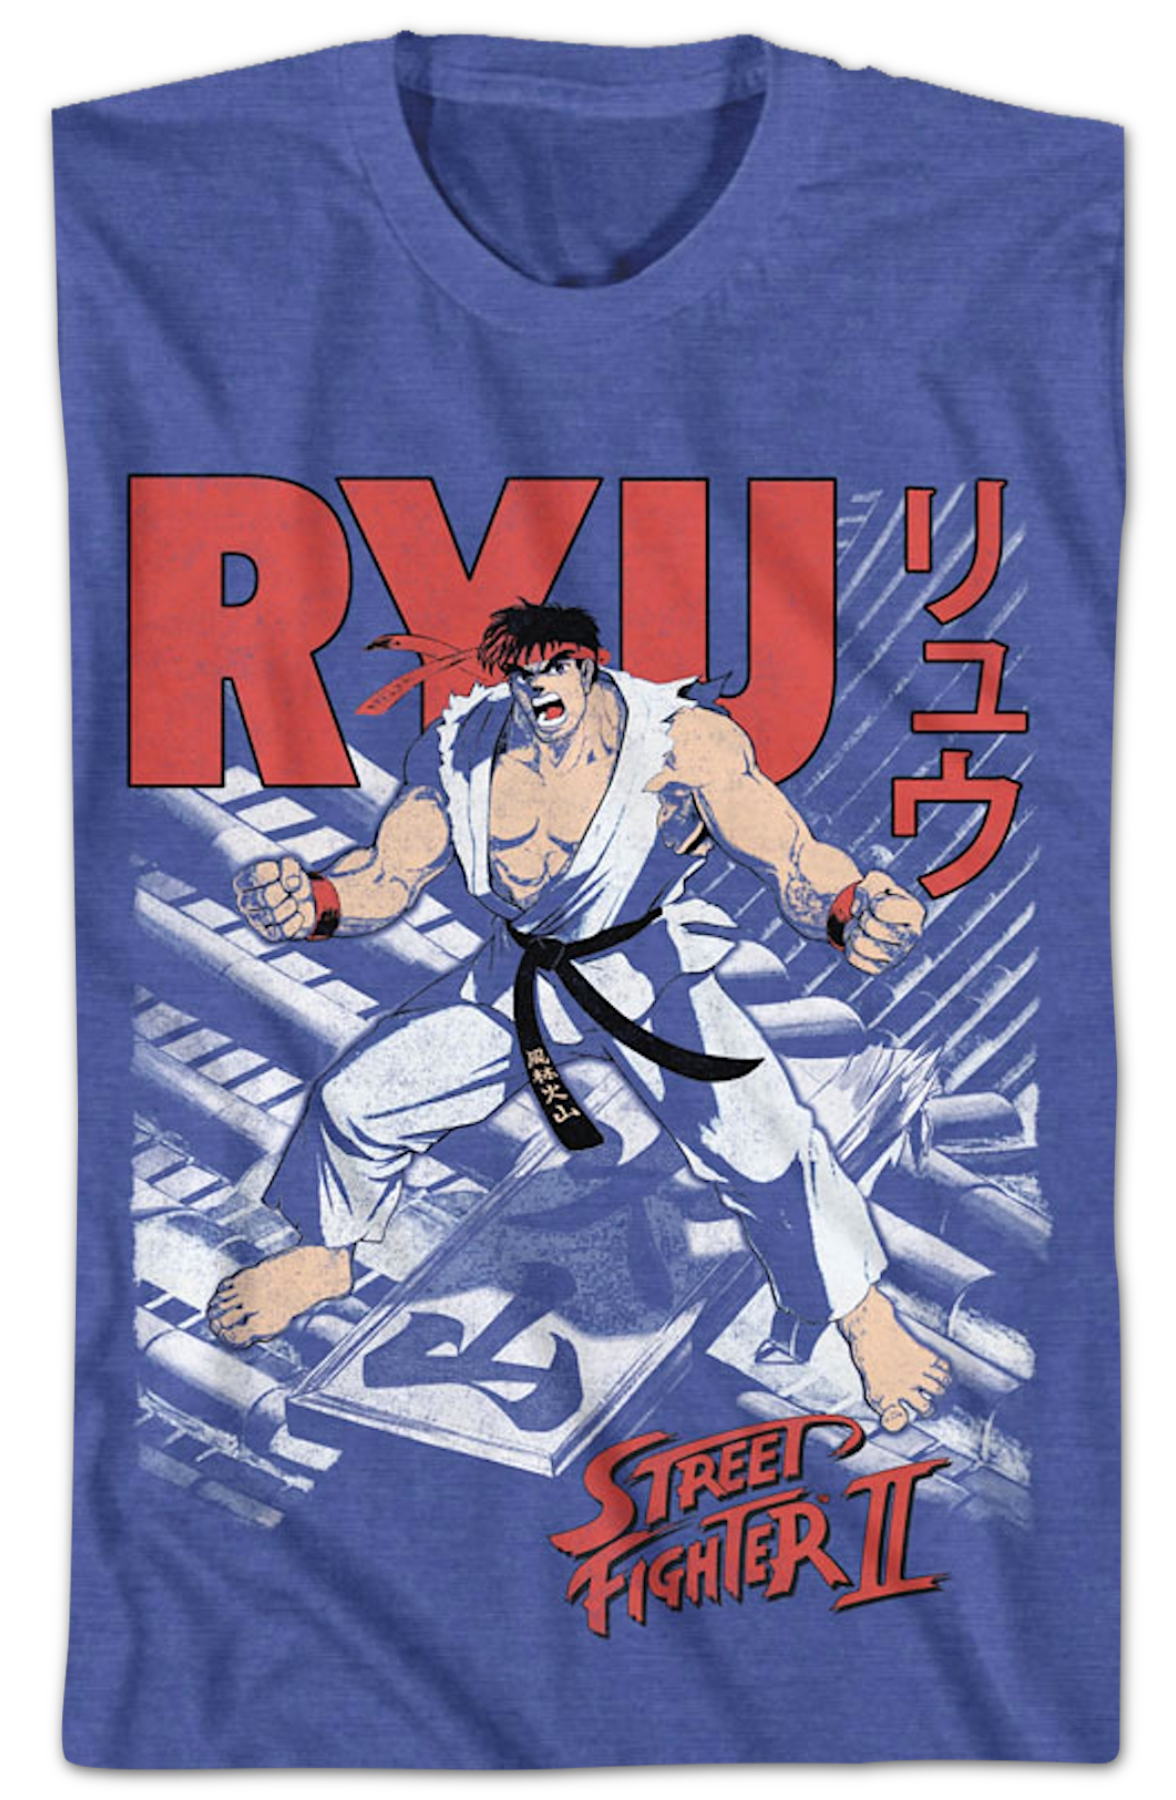 Ryu Japanese Text Street Fighter II T-Shirt